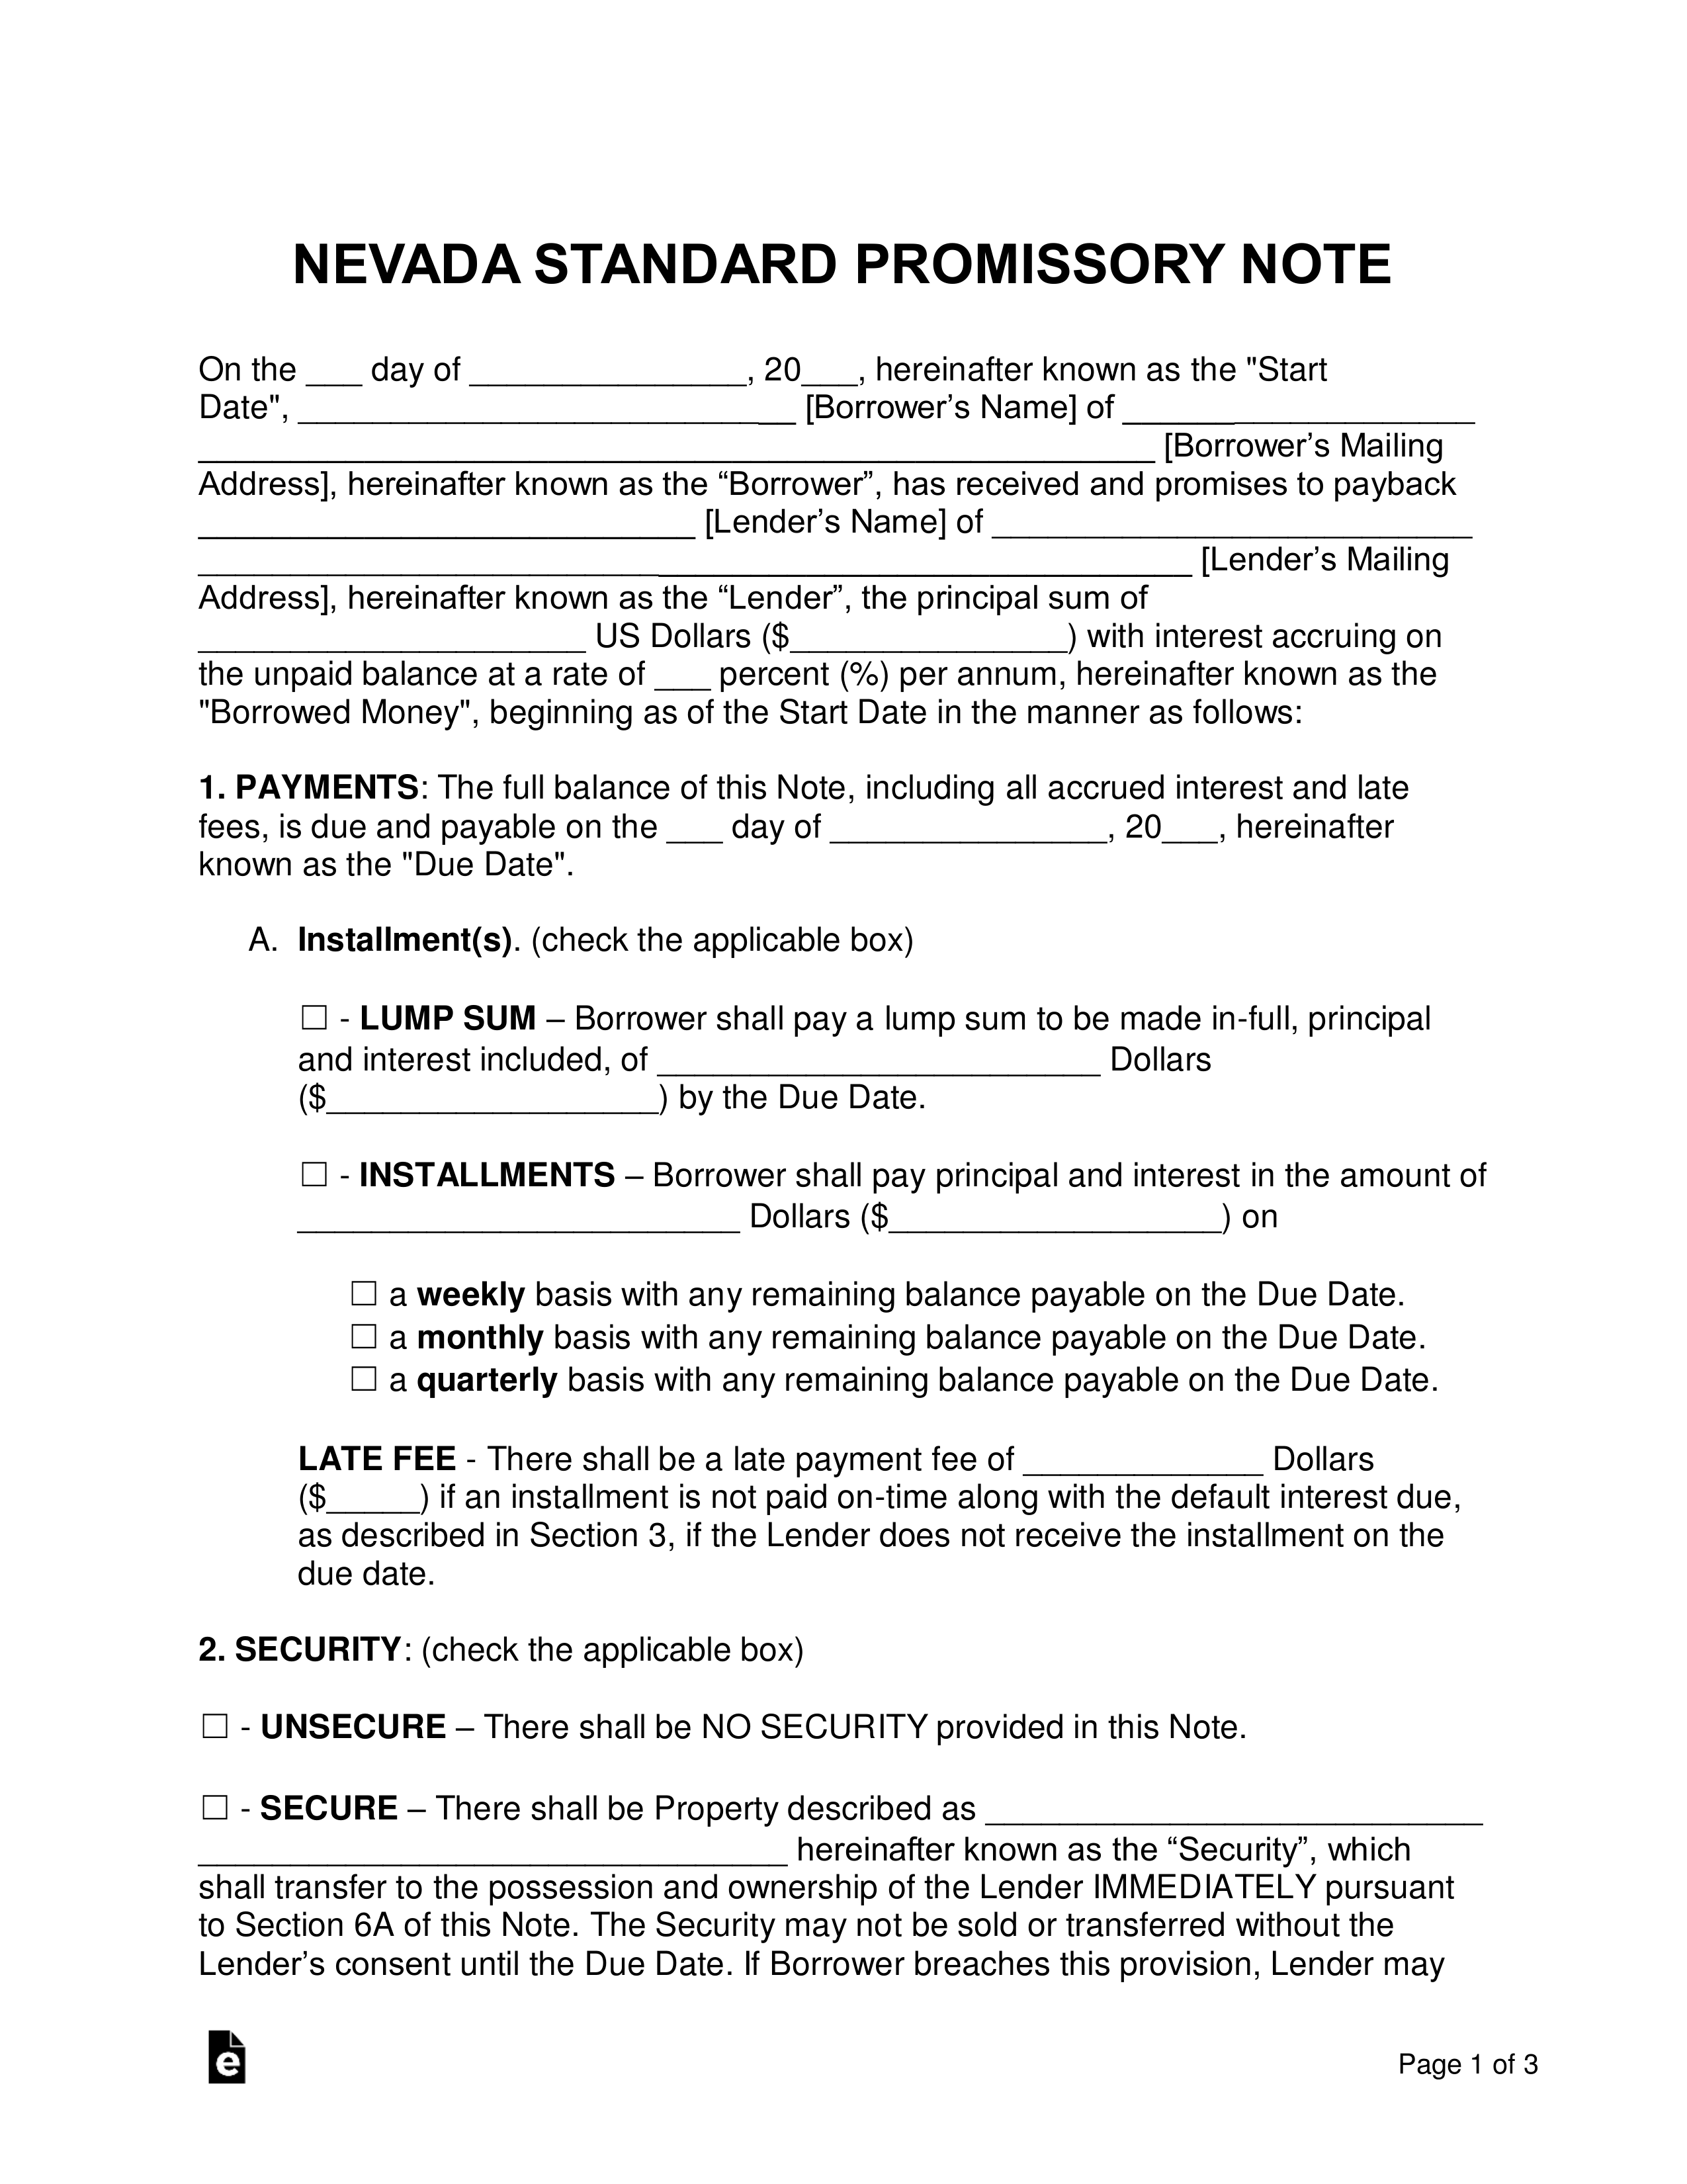 Nevada Promissory Note Templates (2)